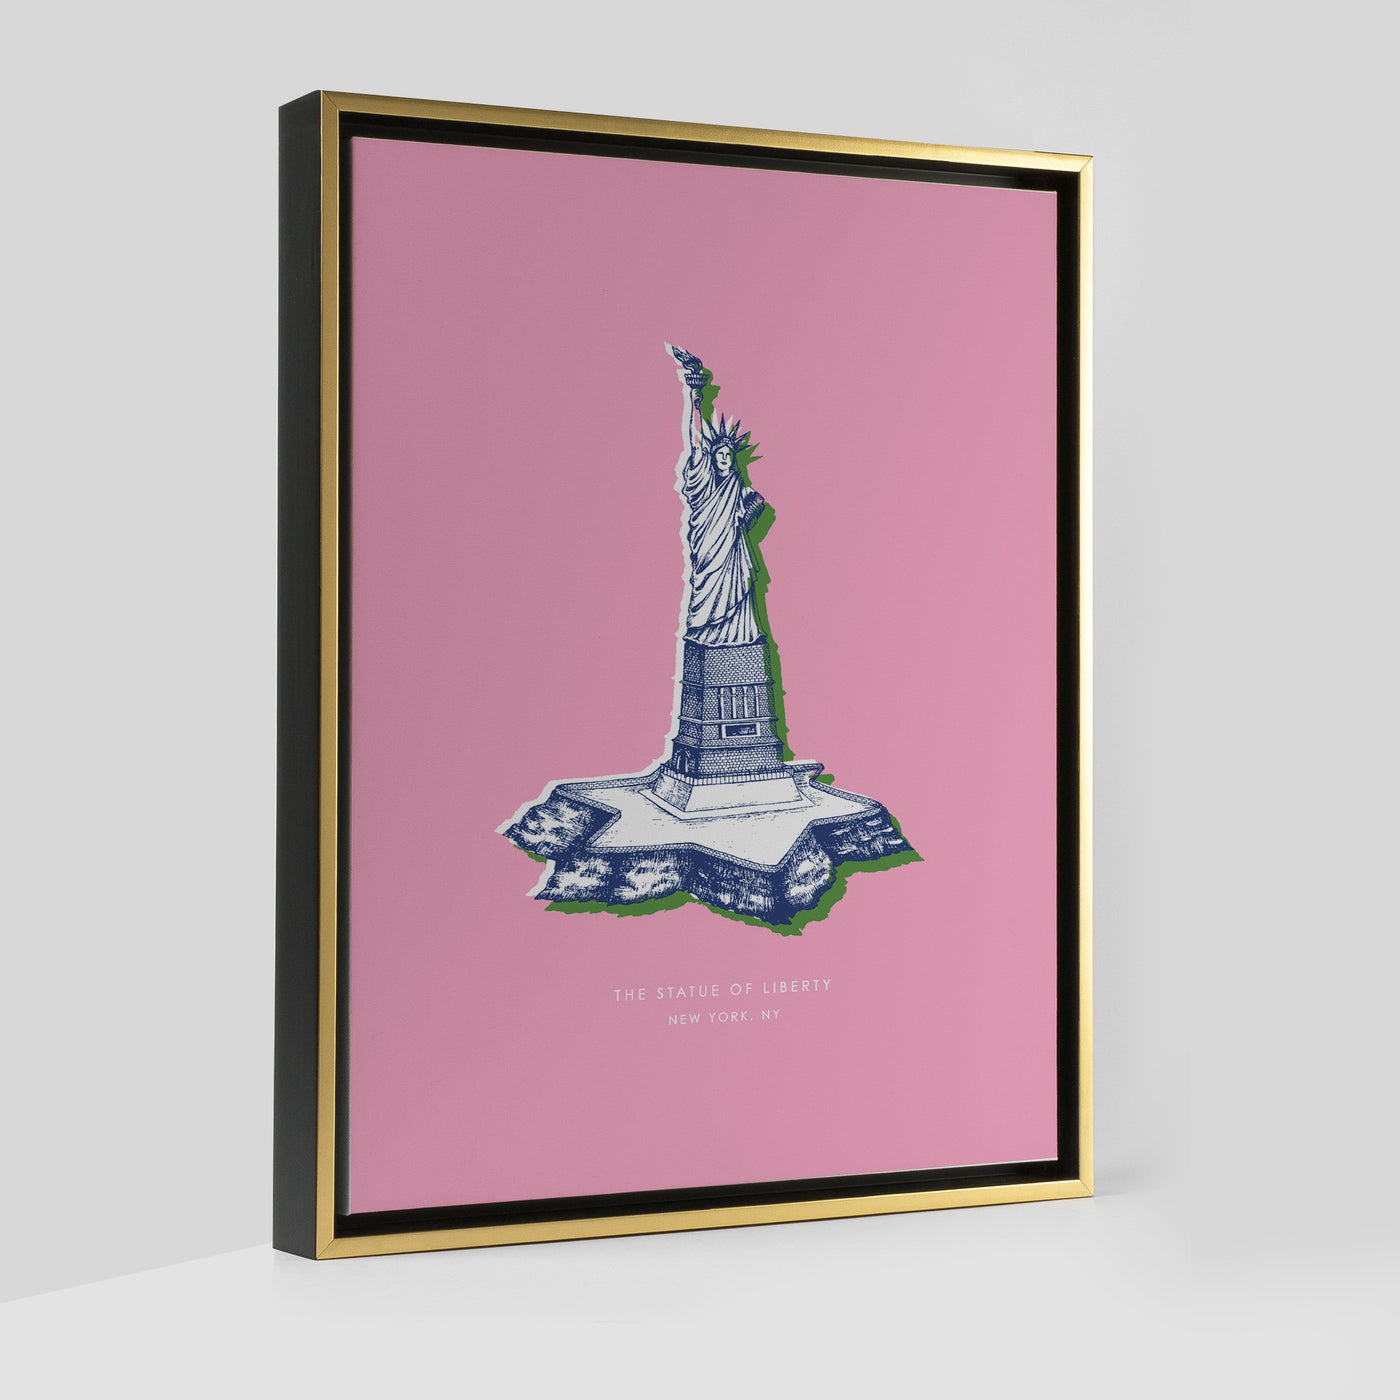 New York Statue of Liberty Print dombezalergii